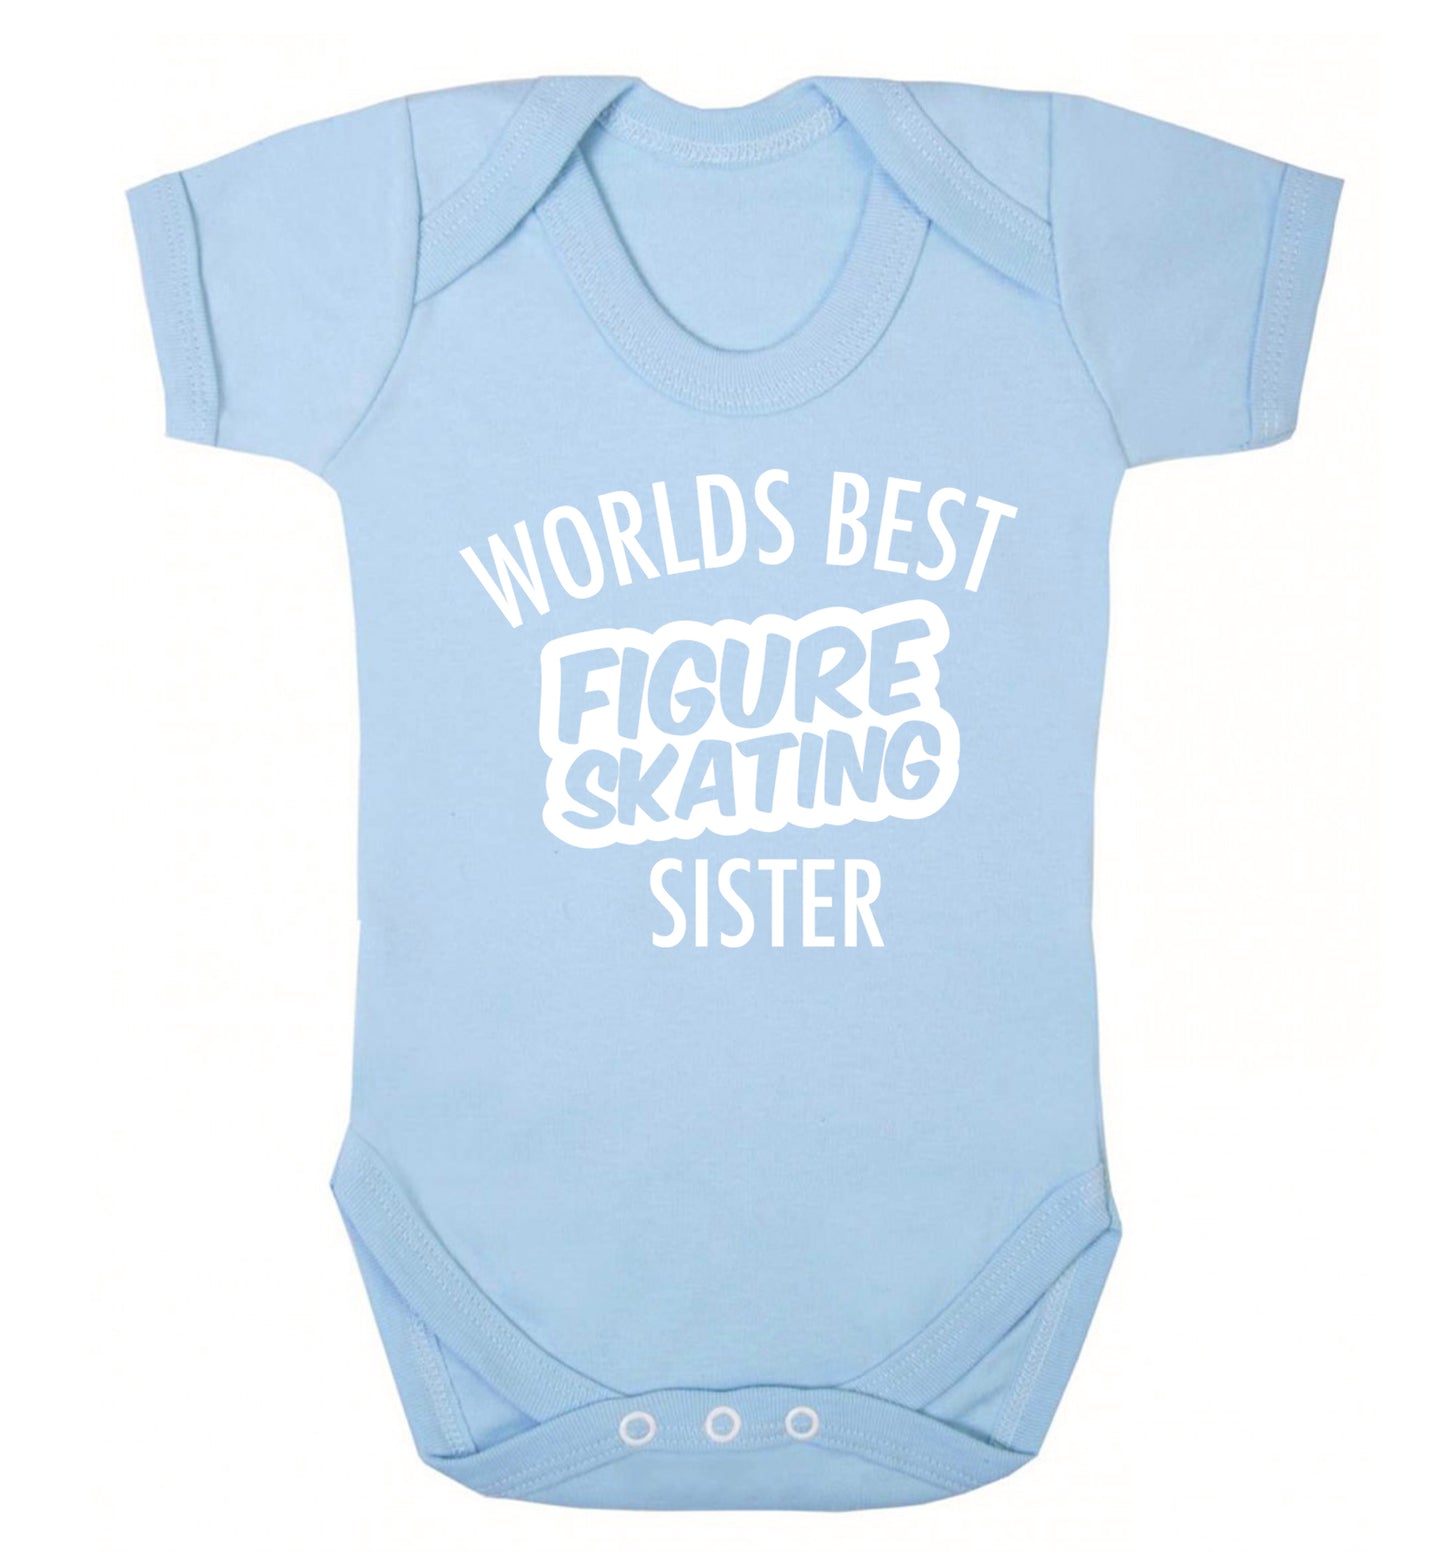 Worlds best figure skating sisterBaby Vest pale blue 18-24 months